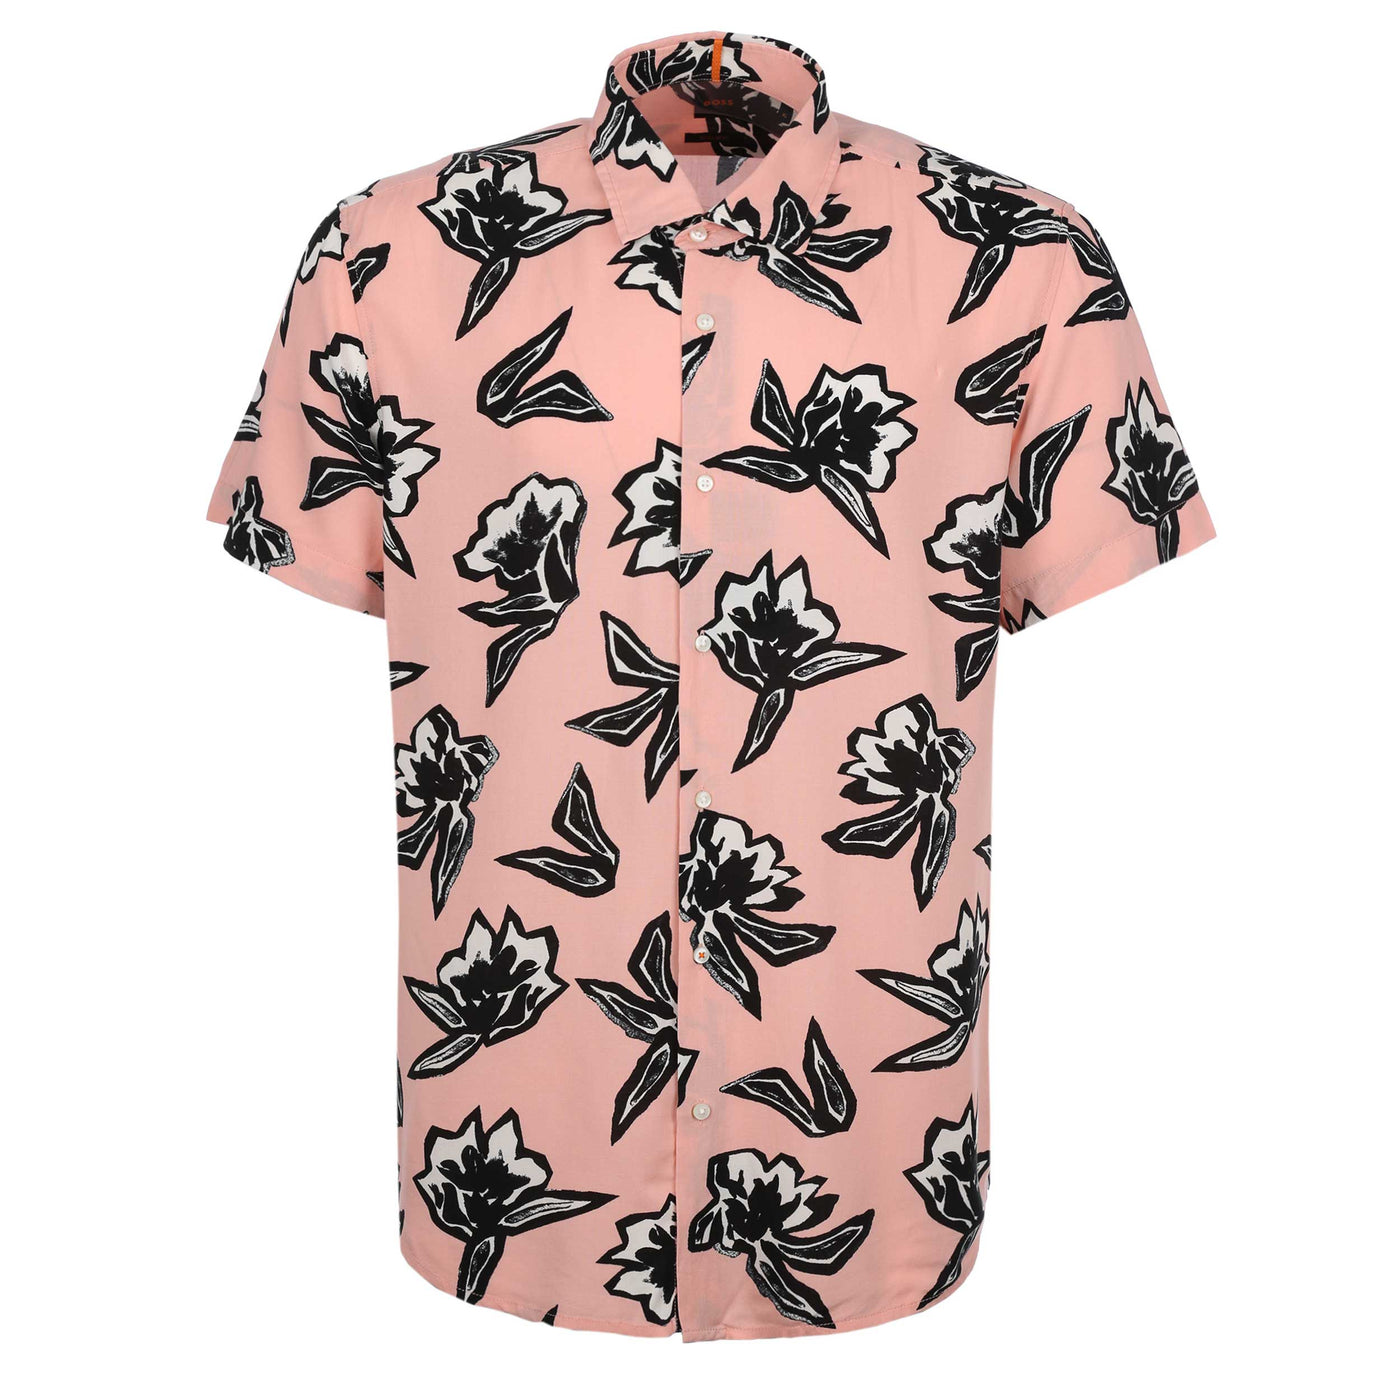 BOSS Rash_1 Short Sleeve Shirt in Pink Floral